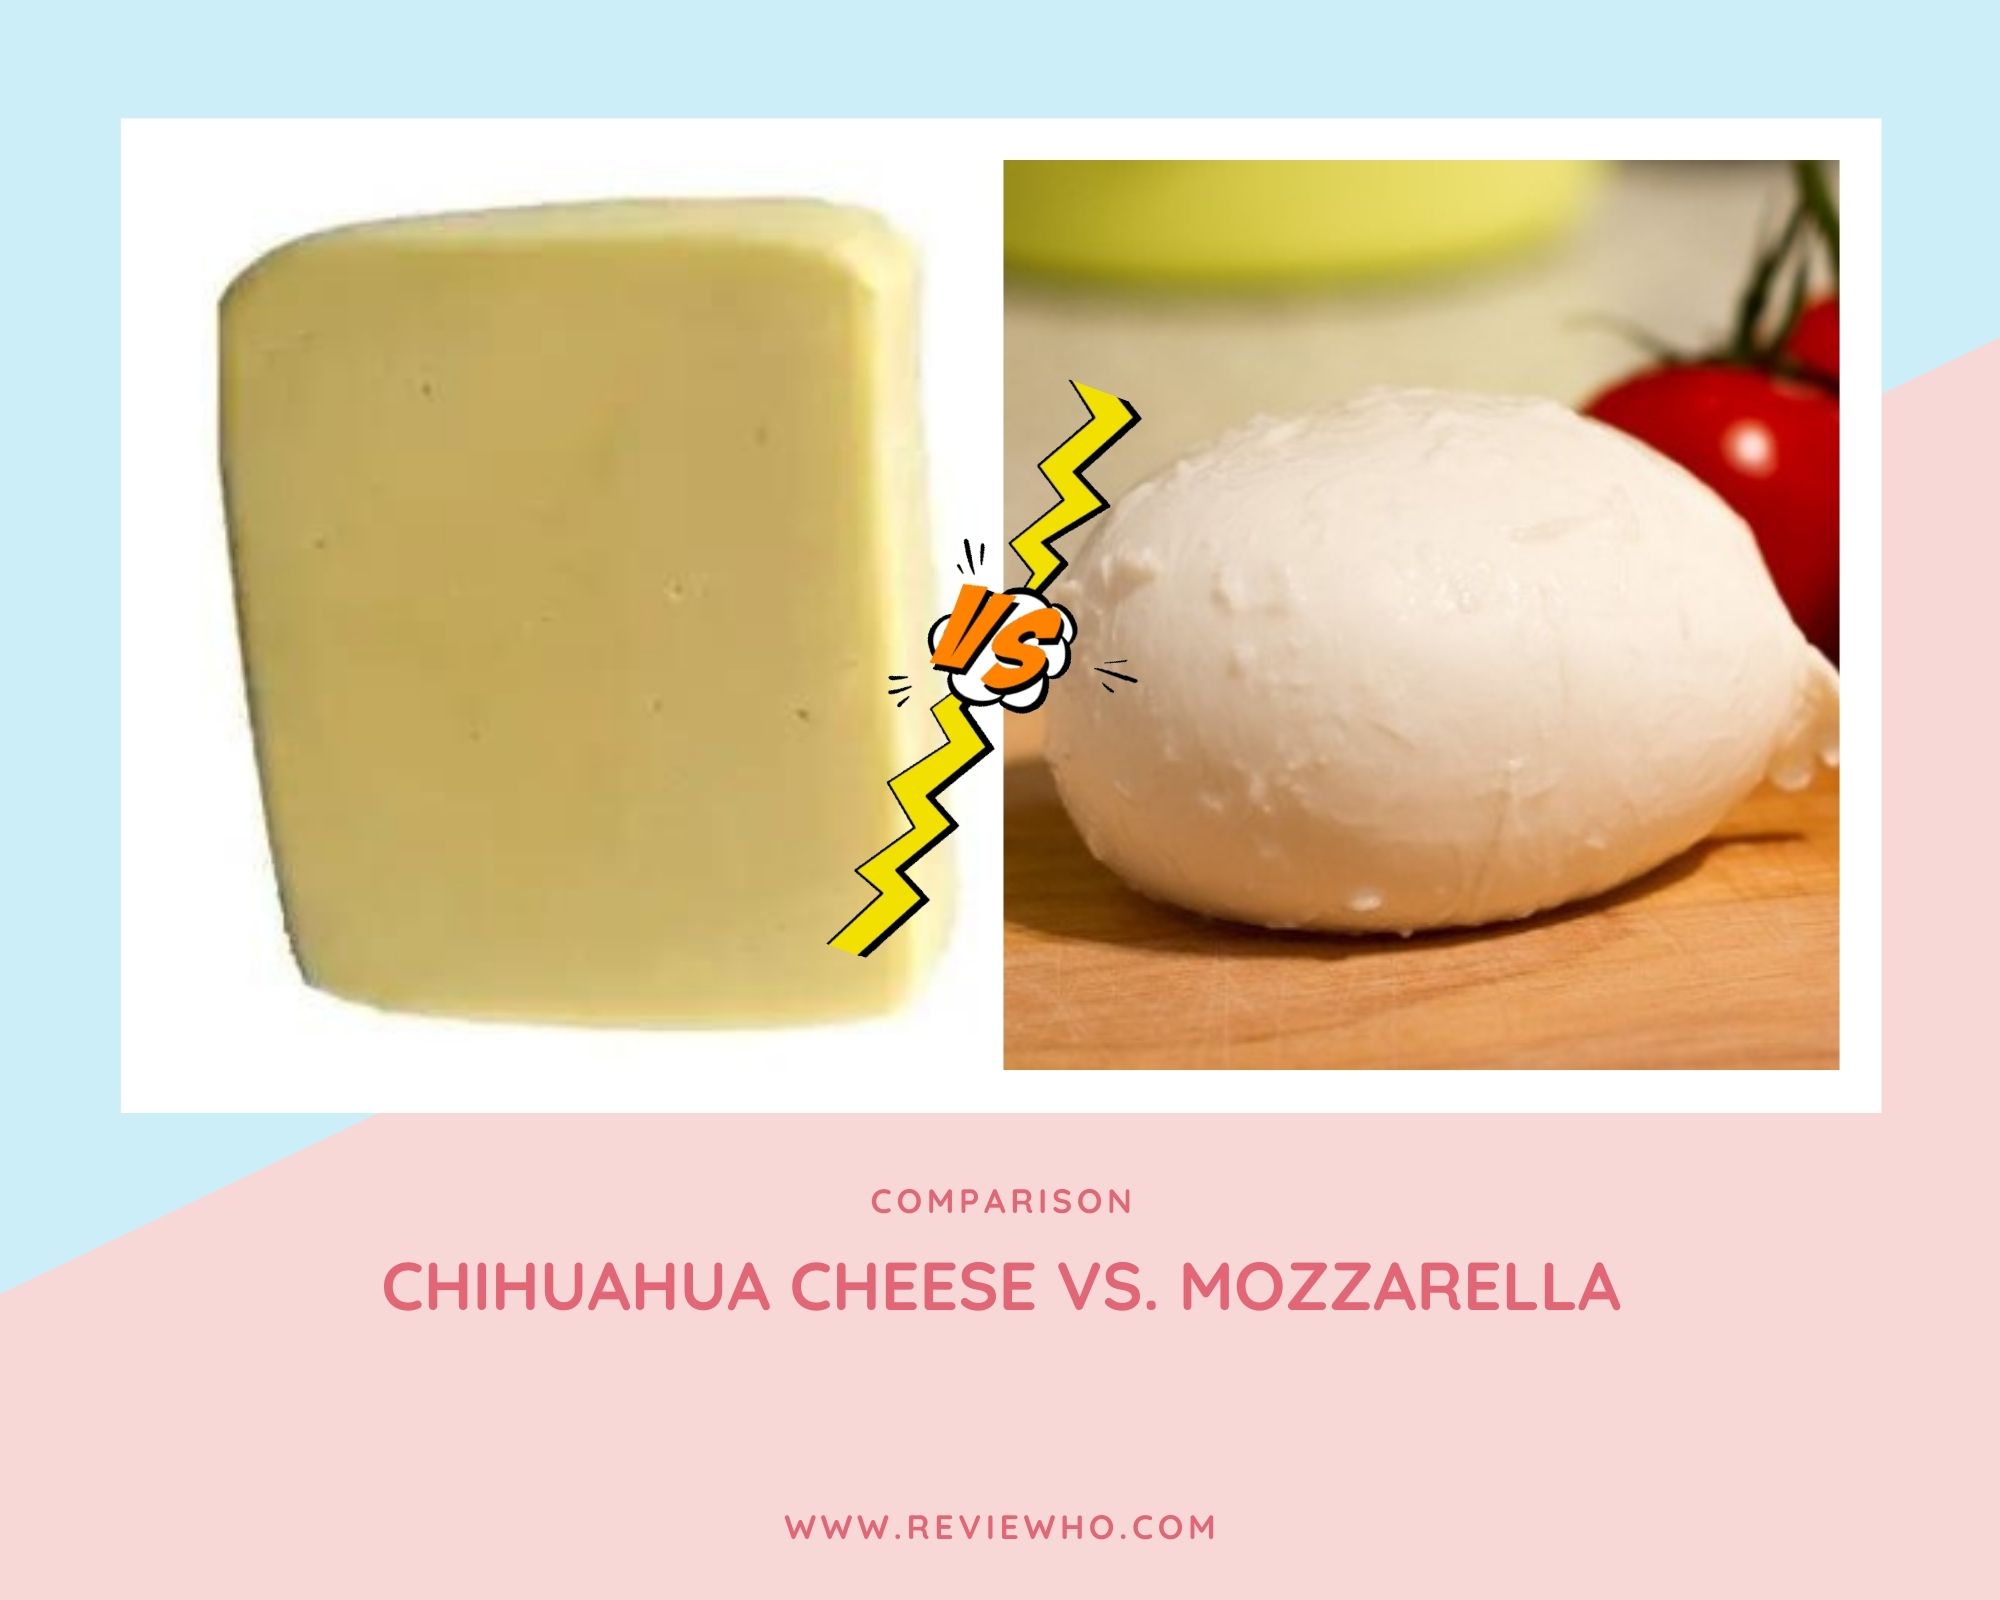 substitute chihuahua cheese for mozzarella